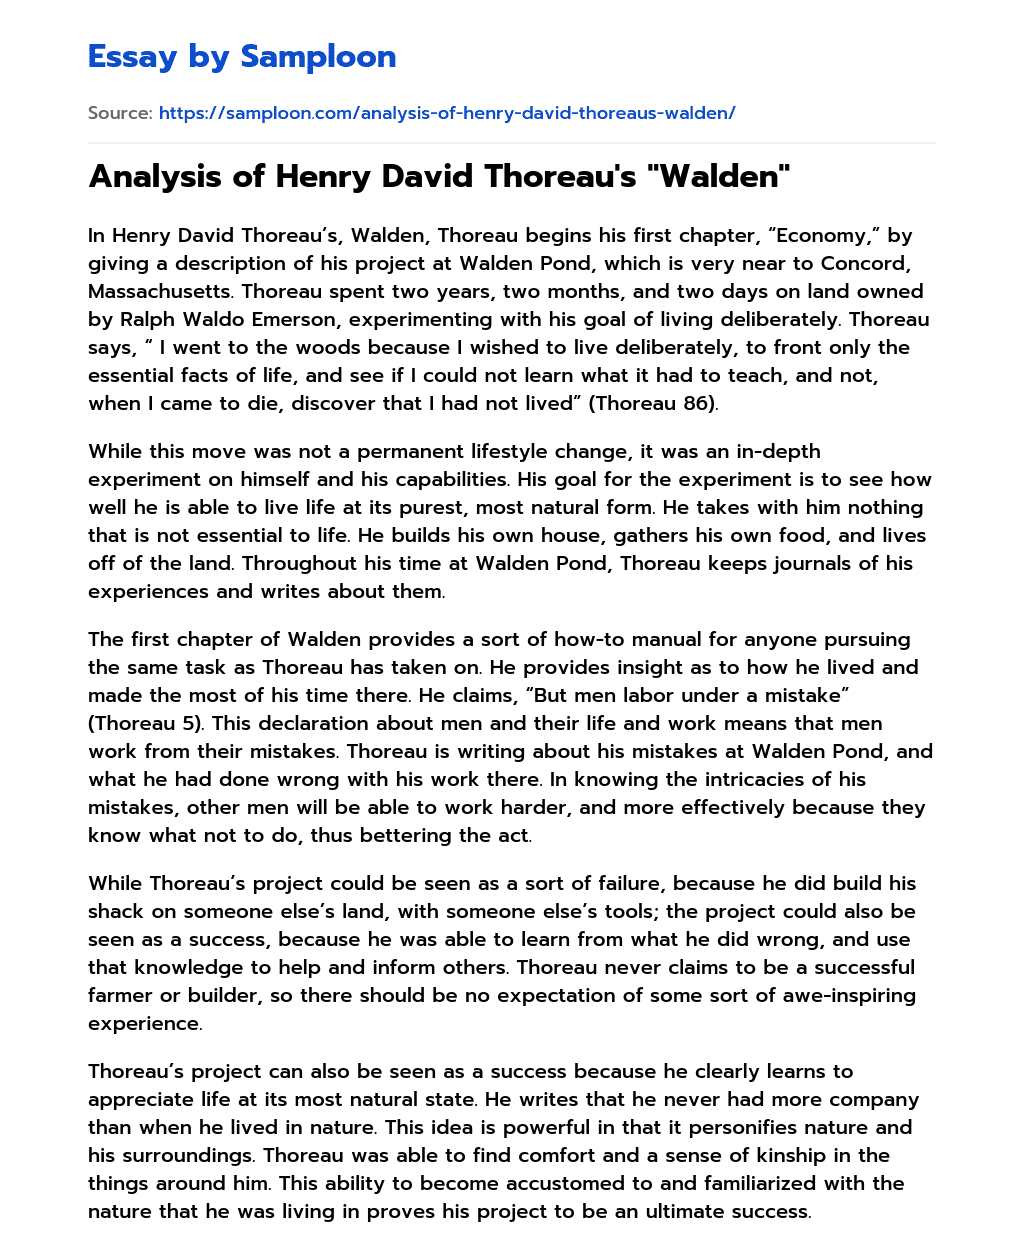 Analysis of Henry David Thoreau’s “Walden” essay